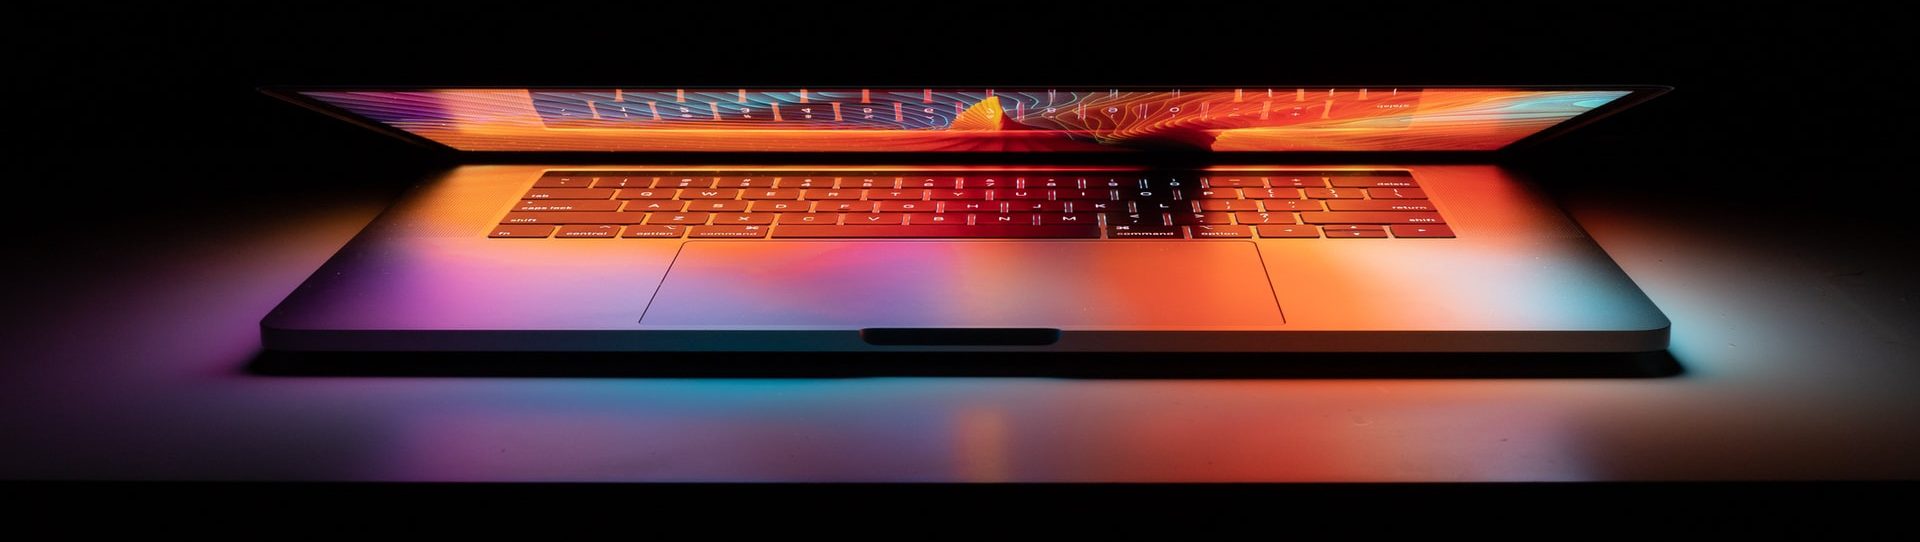 Laptop computer on black background